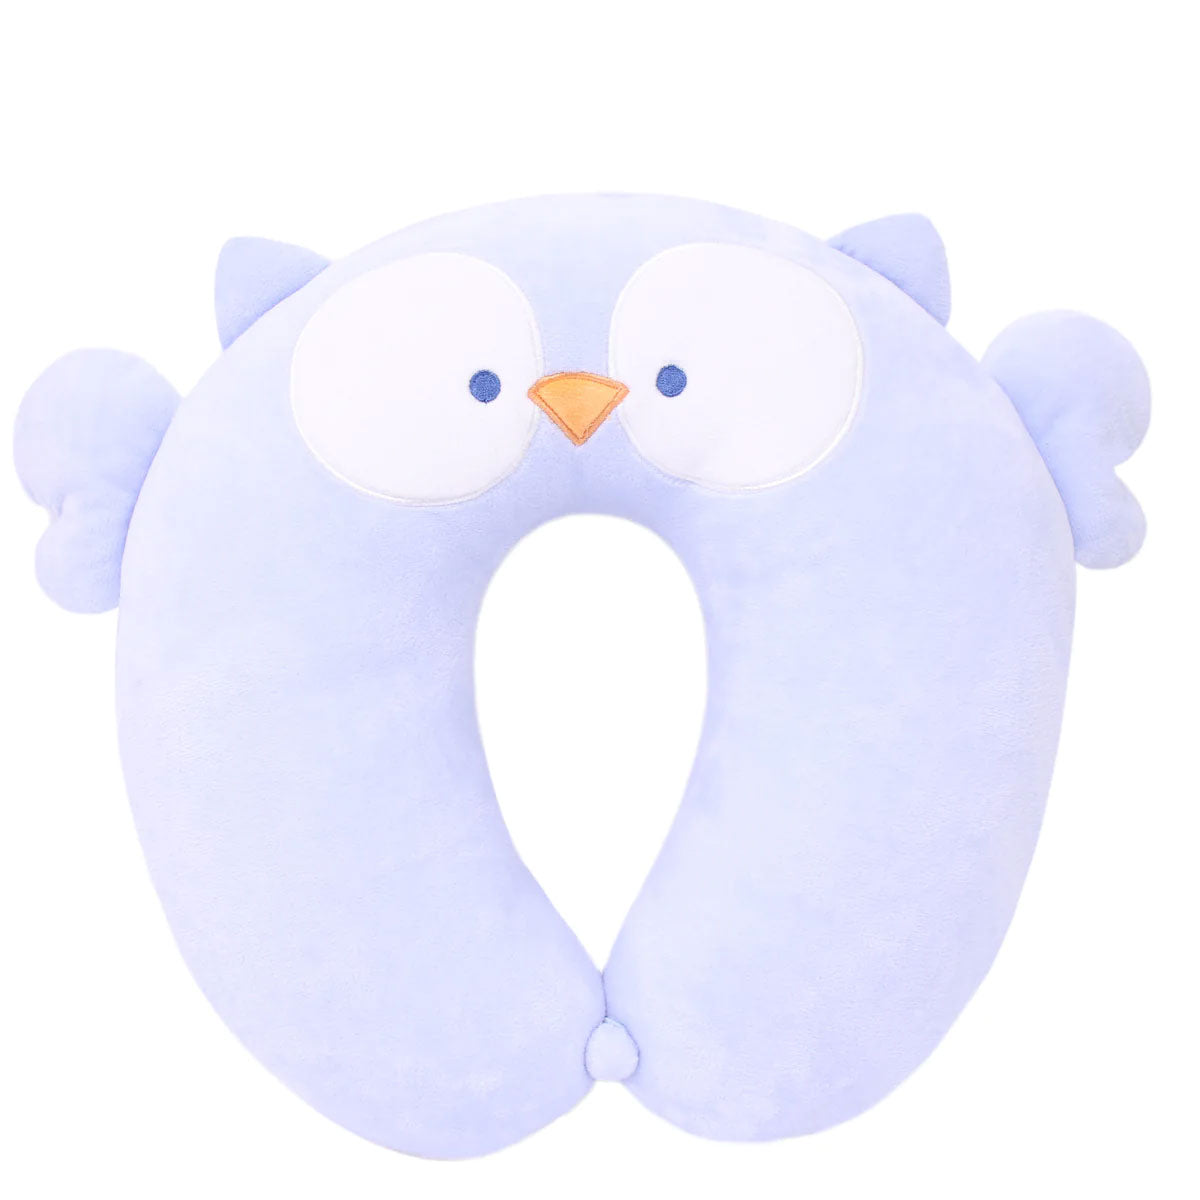 AniRollz Plush Neck Pillows - Owl